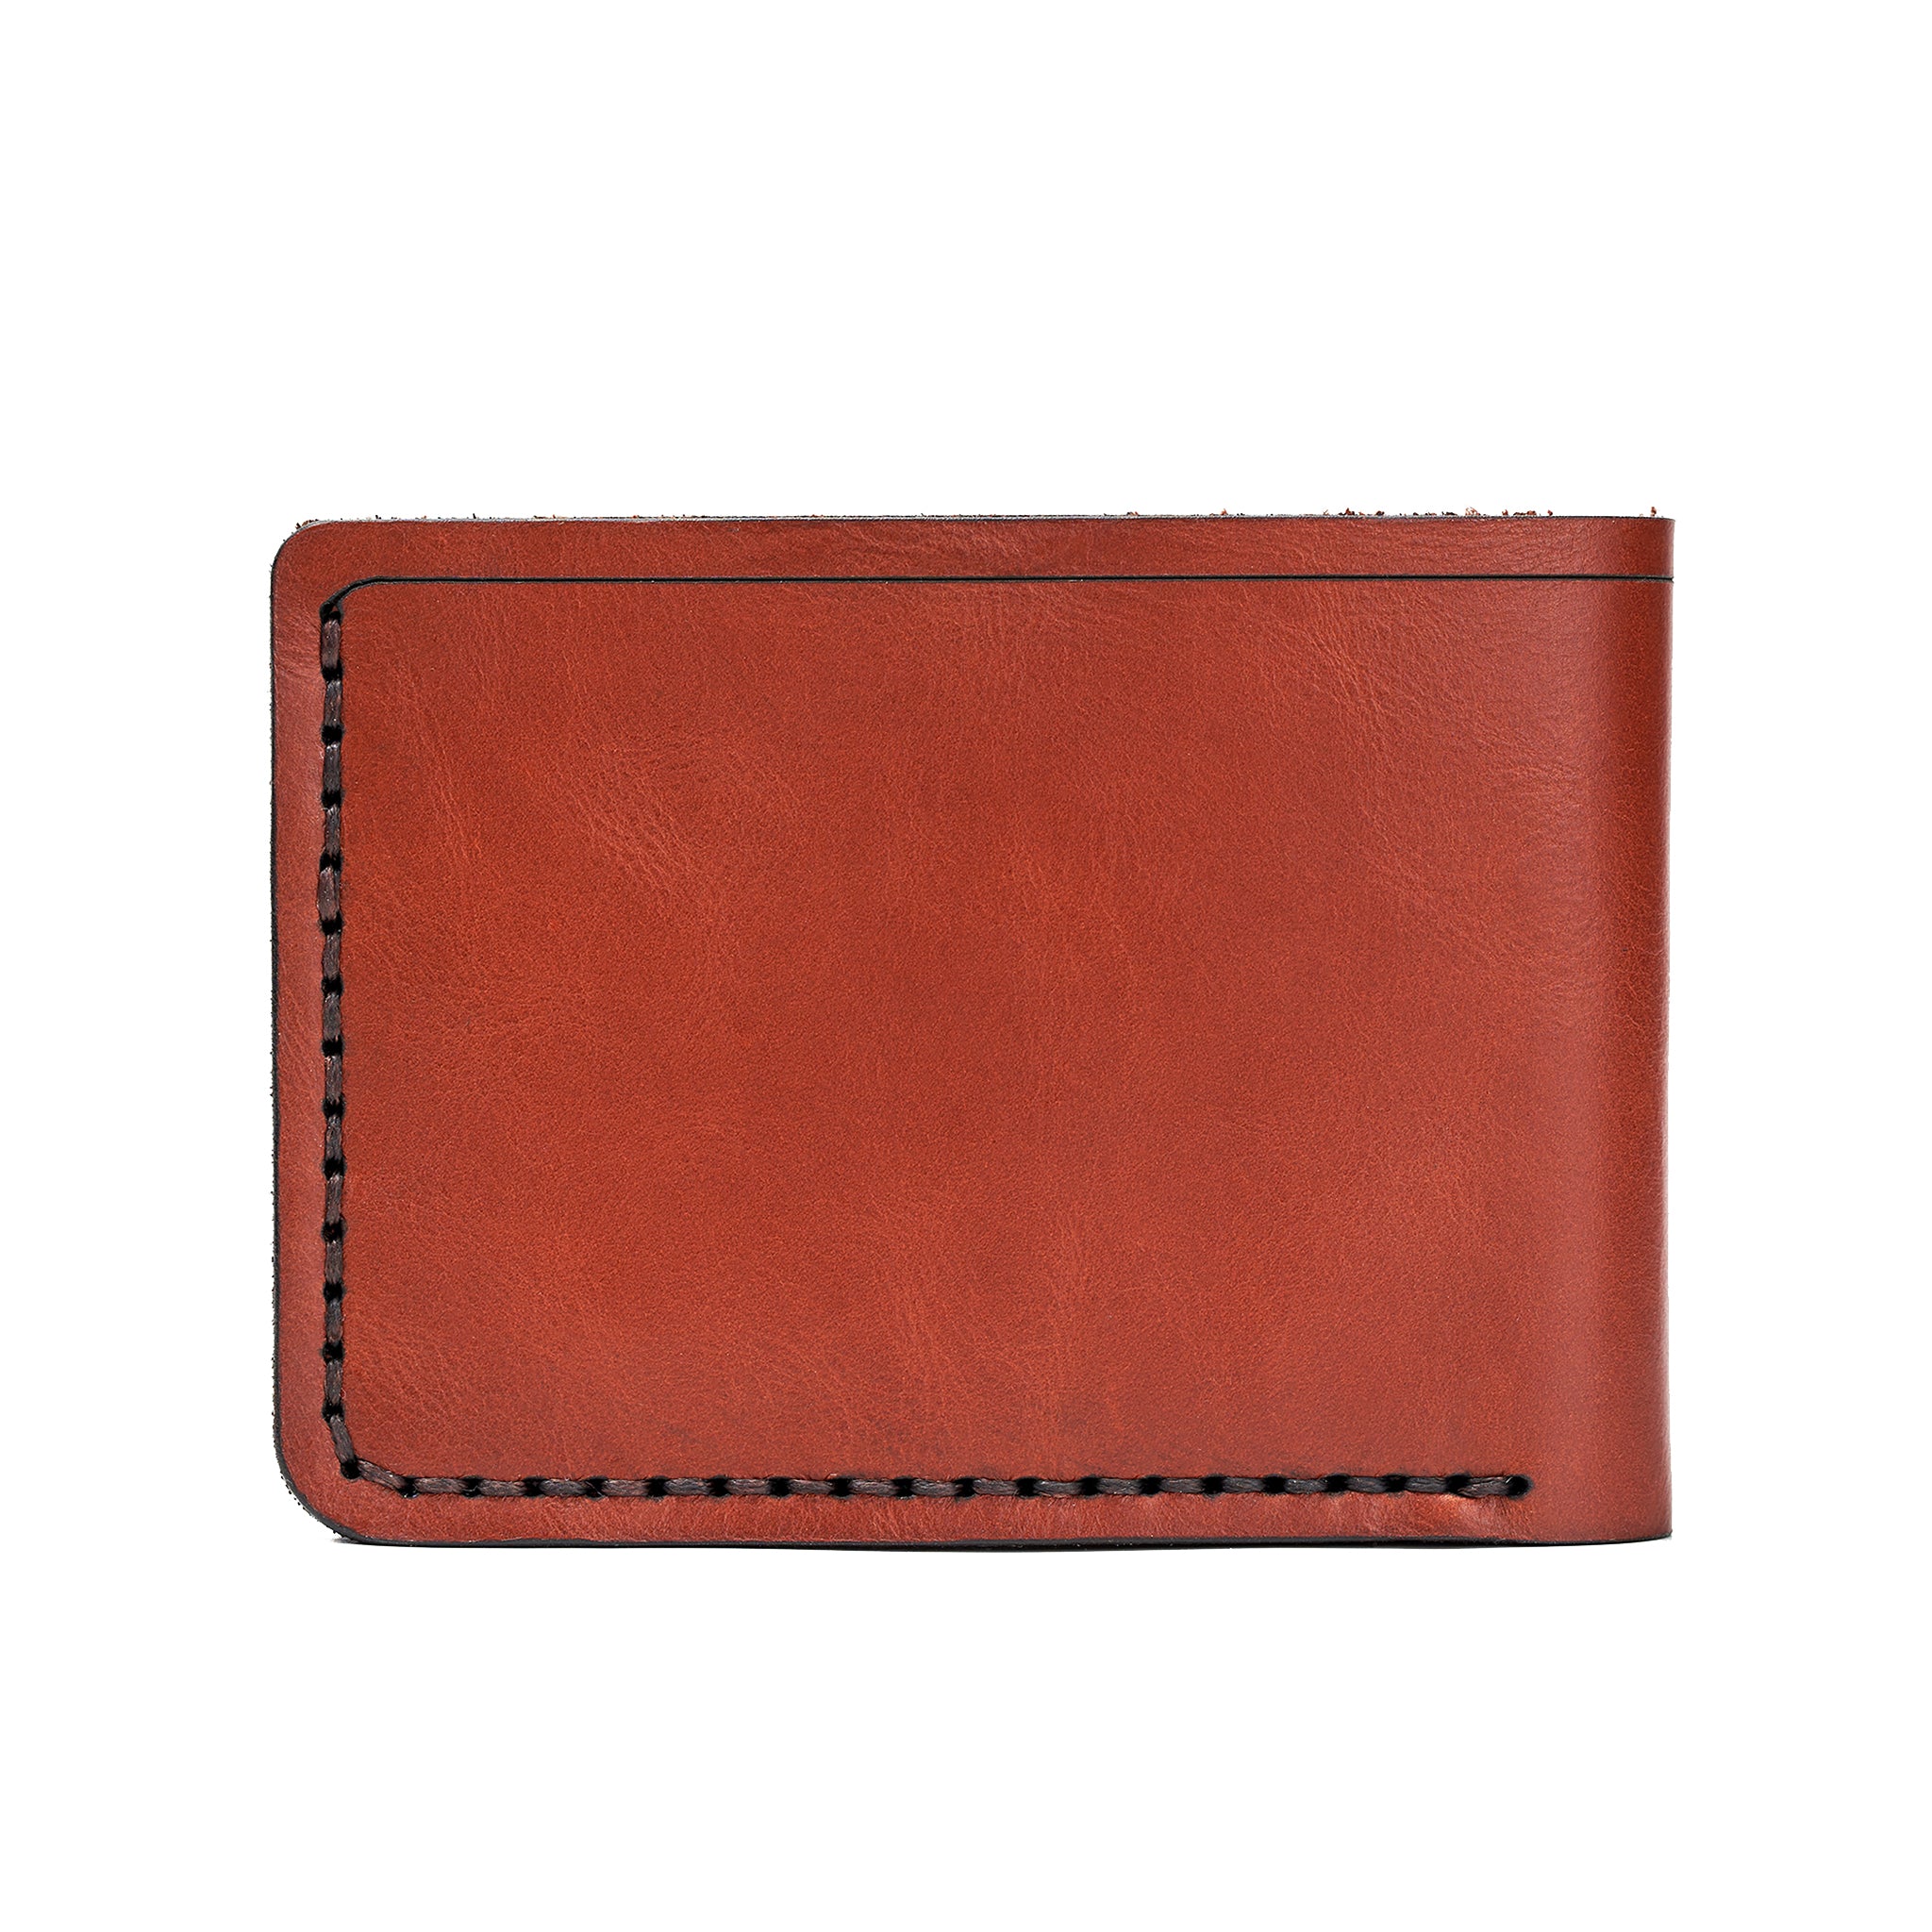 Handmade Men's Wallet 4 Card Slots Red Brick 31707838840983